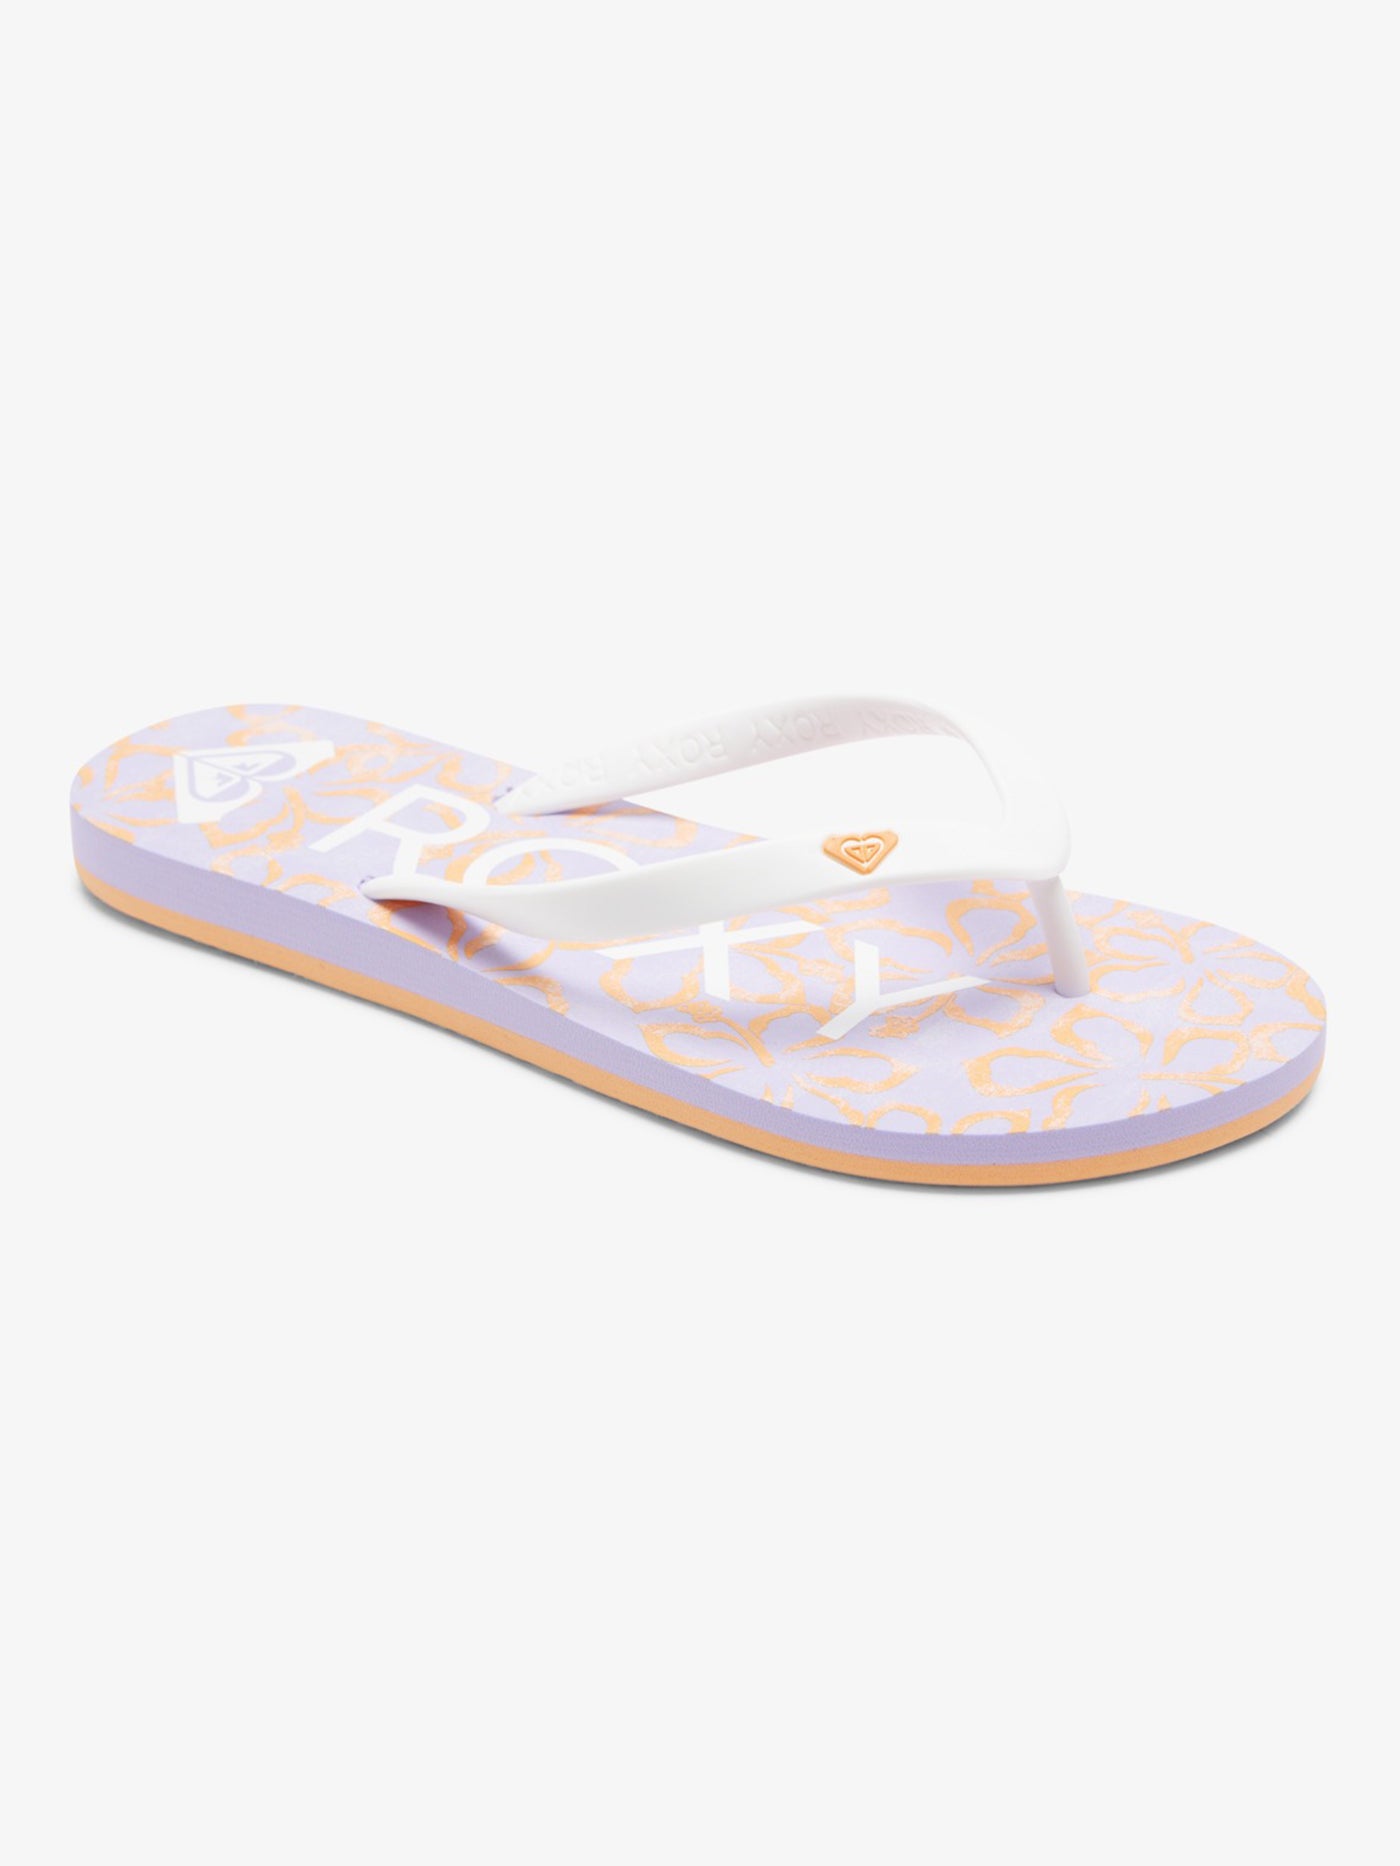 Roxy Spring 2023 Tahiti VII White/Lavender Sandals